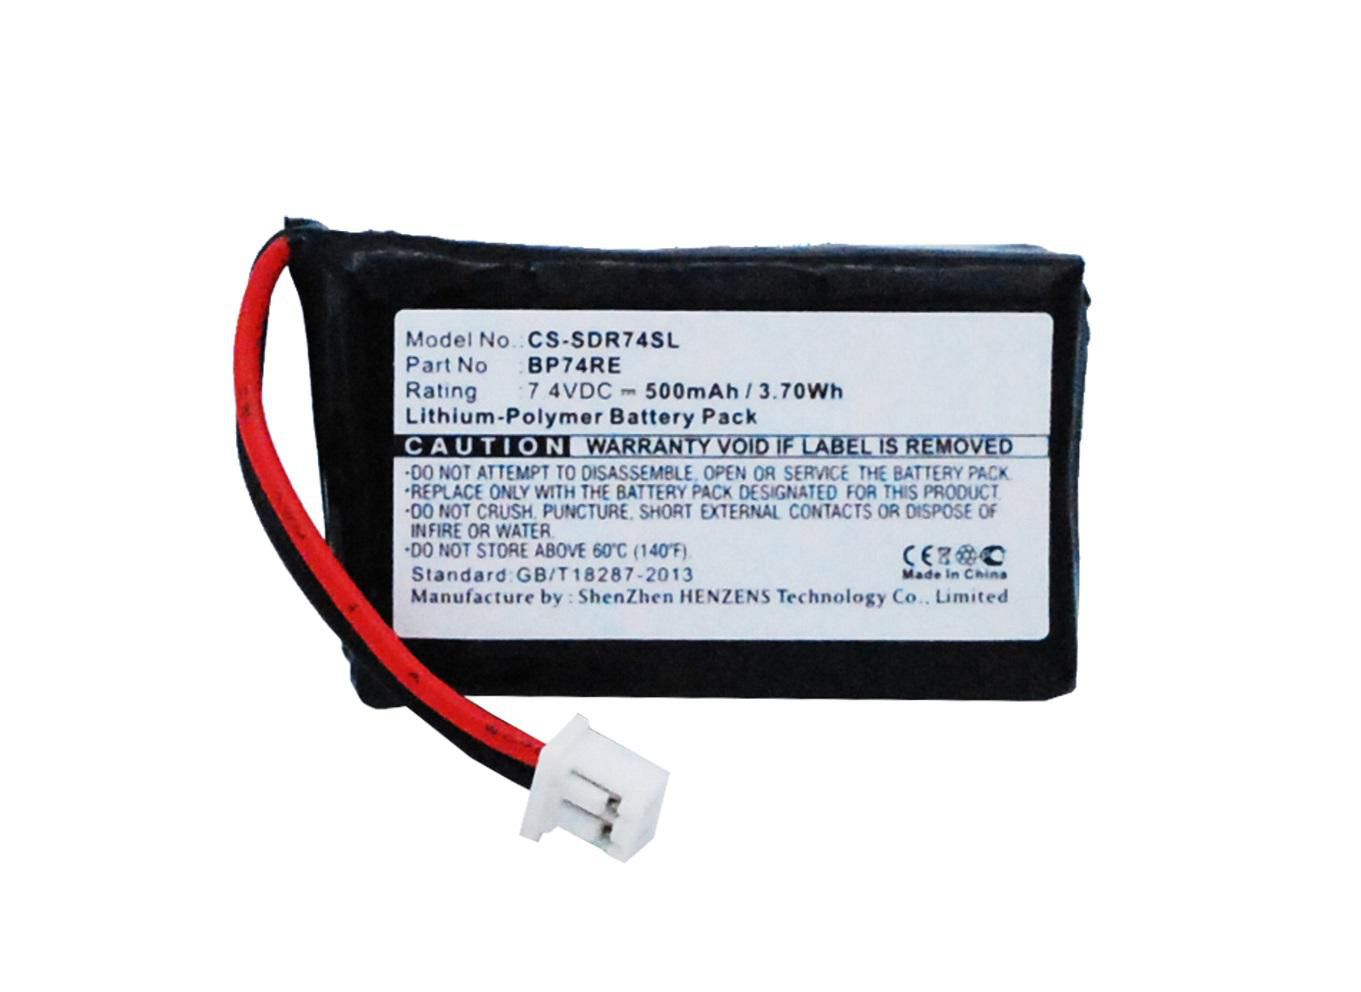 CoreParts MBXDC-BA019 W125990259 Battery for Dog Collar 